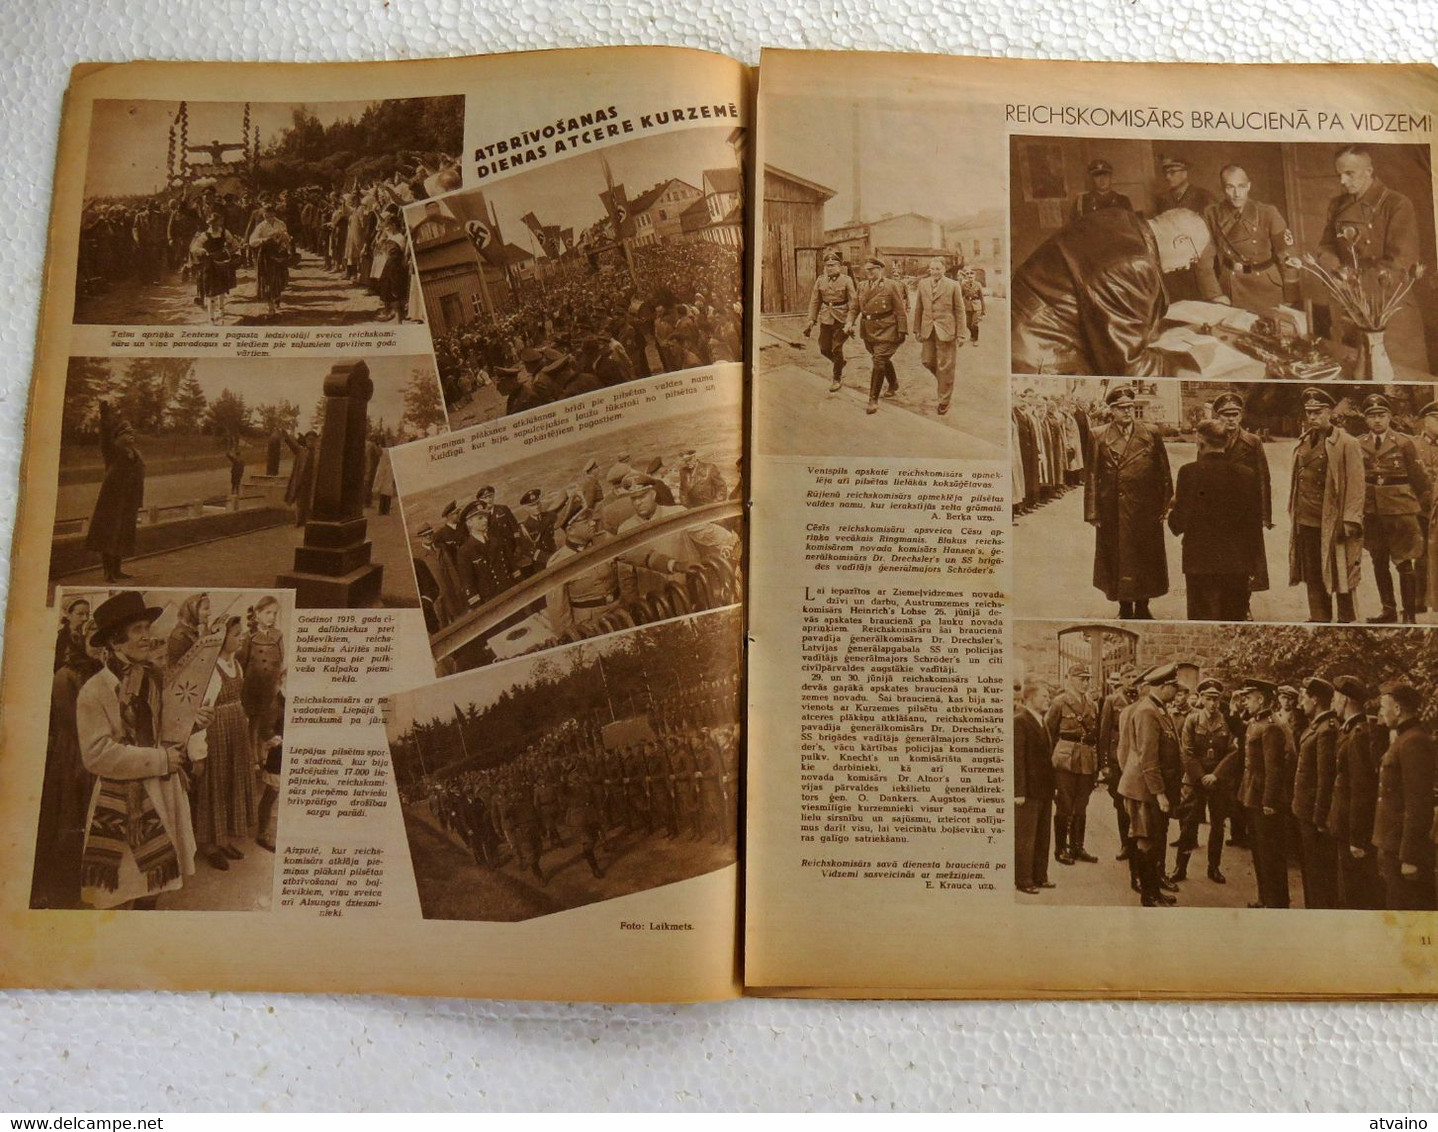 WW2 LATVIAN VINTAGE MAGAZINE "LAIKMETS" ISSUED 1942 YEAR